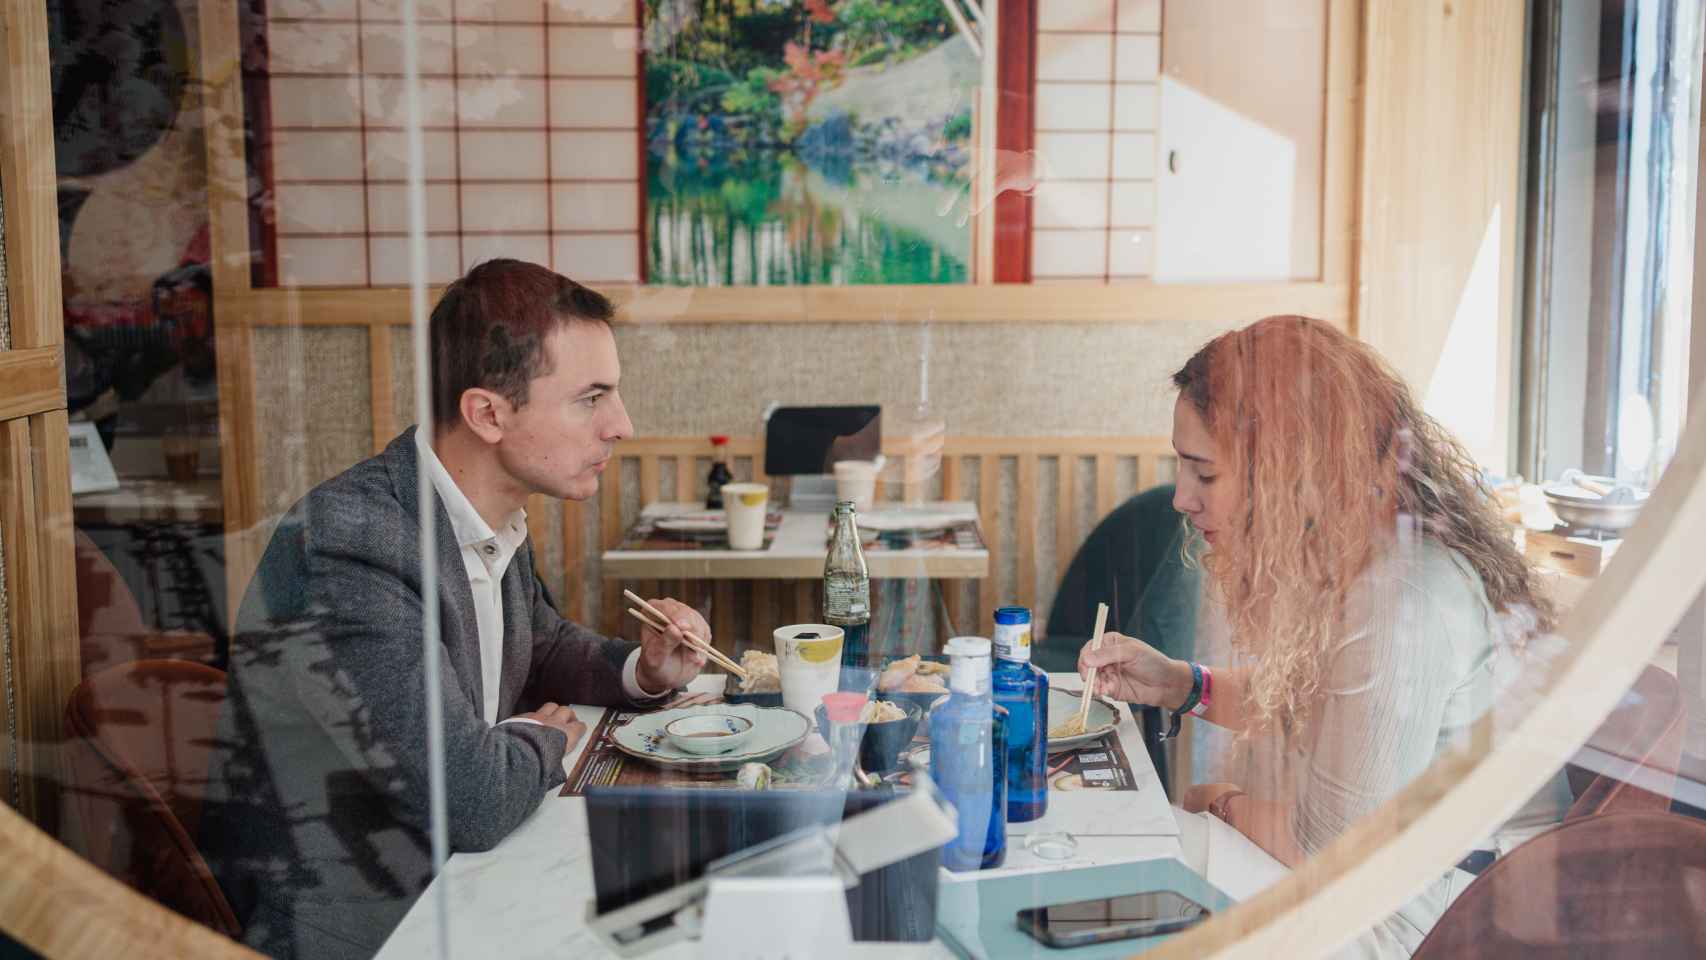 Juan Lobato e Irene P. Nova comiendo sushi.